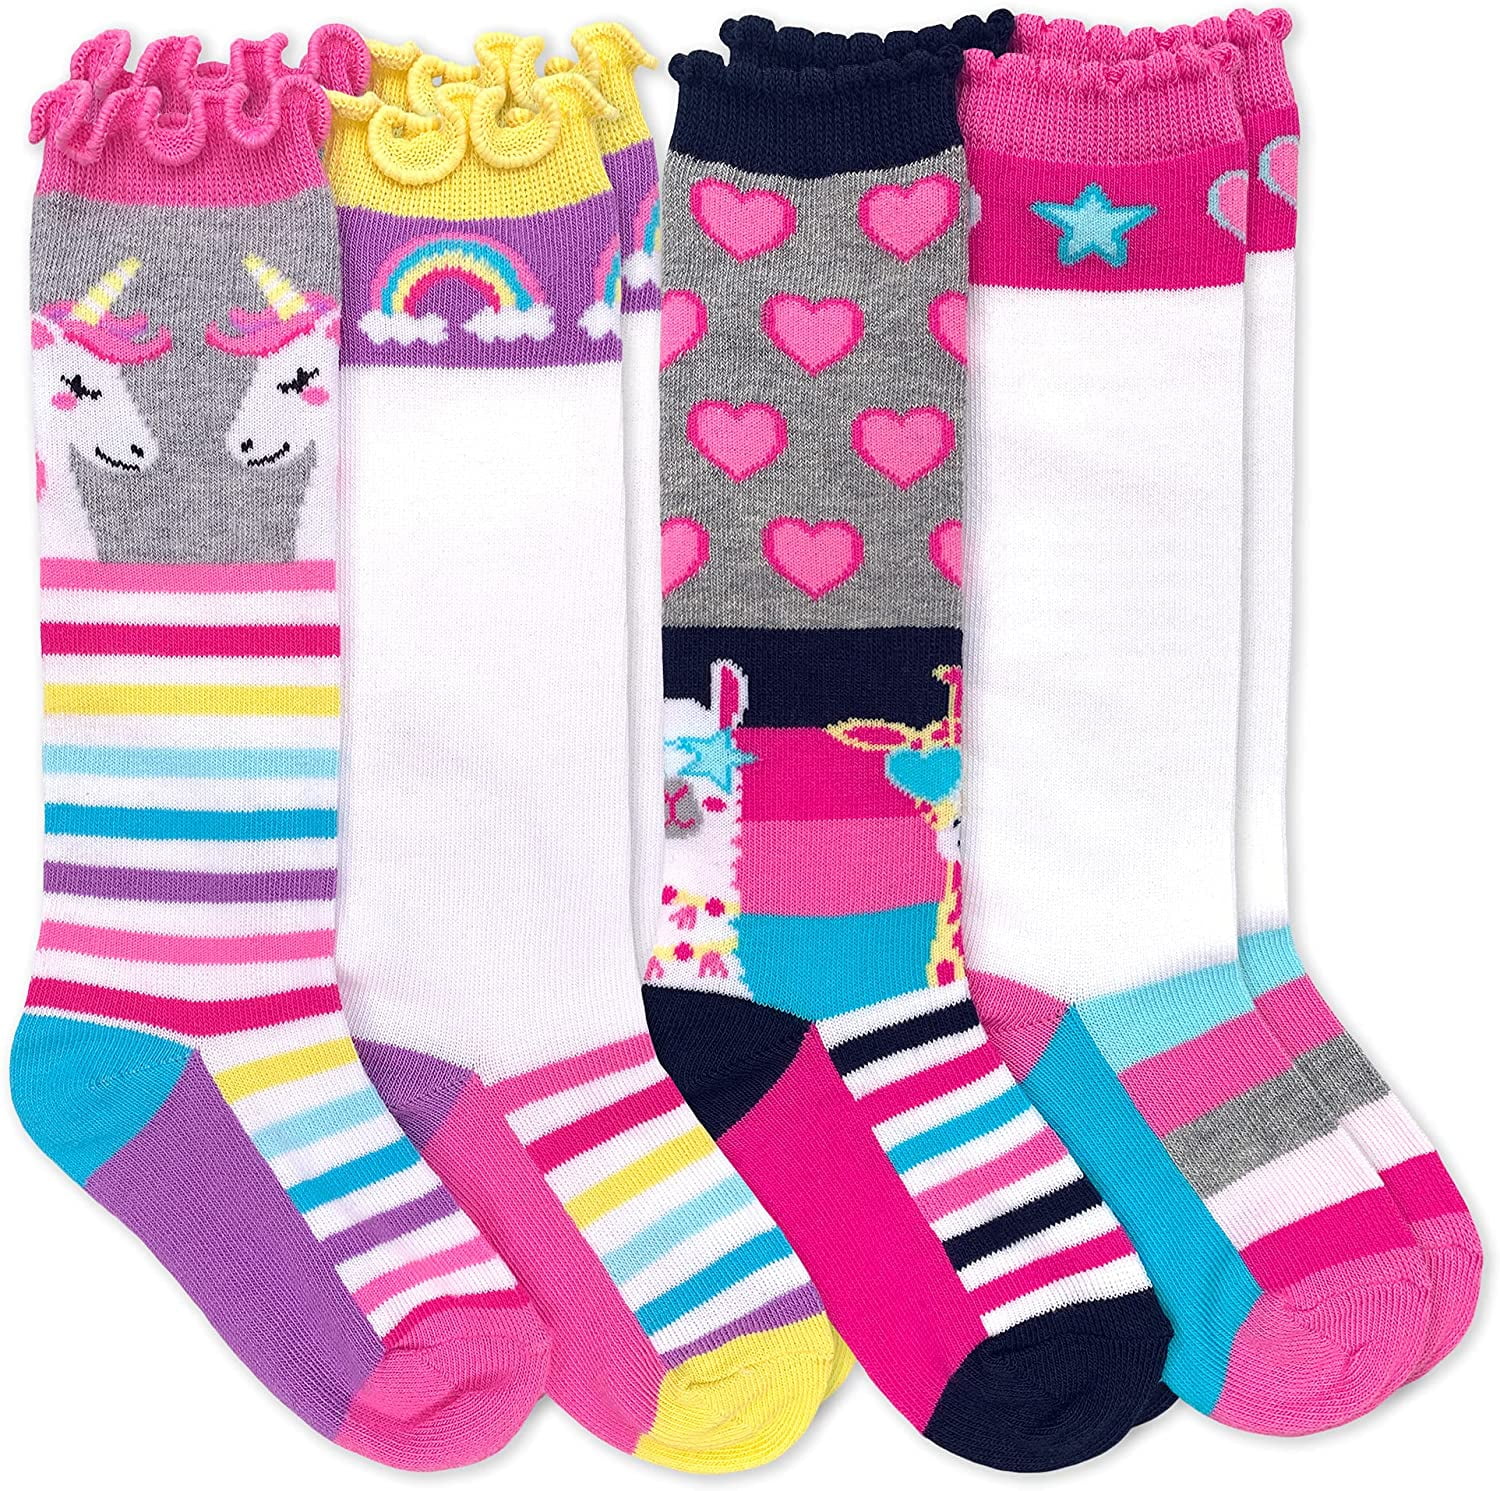 5 Pairs Children/Kids Girls Knee High Plain School Cotton Rich Socks 